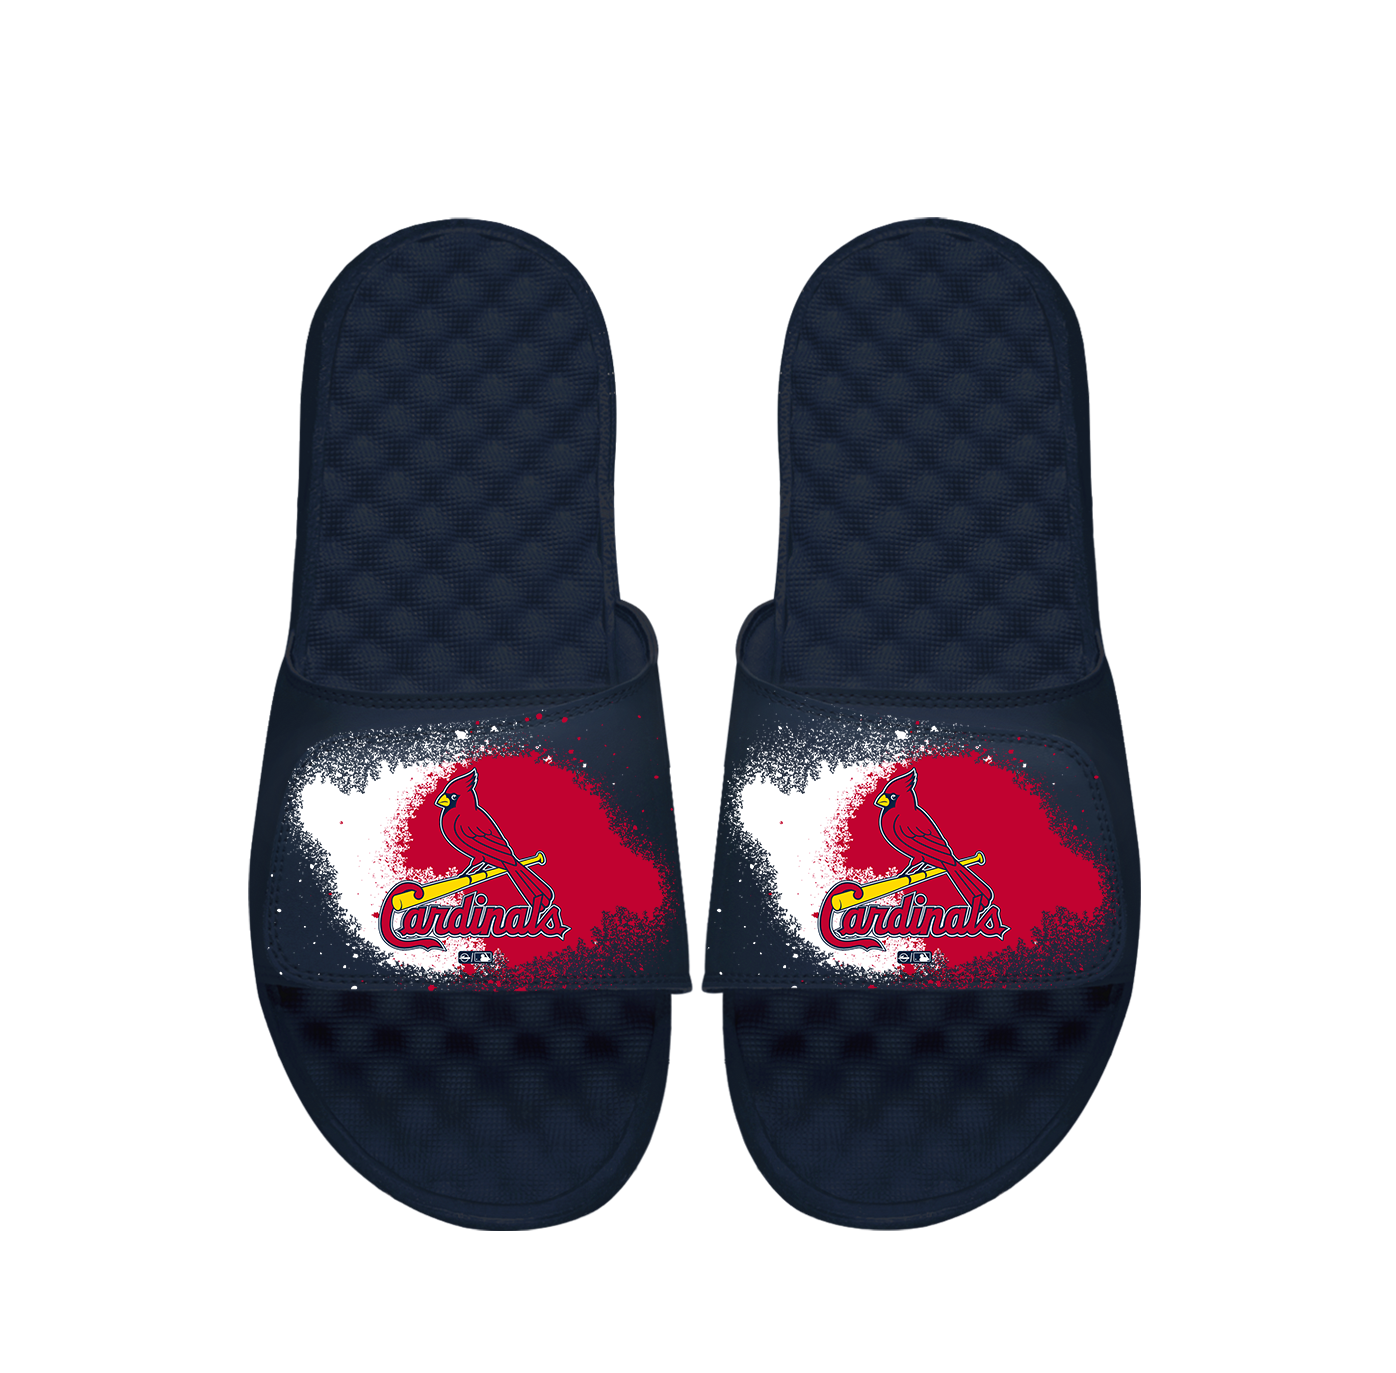 St Louis Cardinals MLB 2013 Big Logo Swoop Slide Slippers